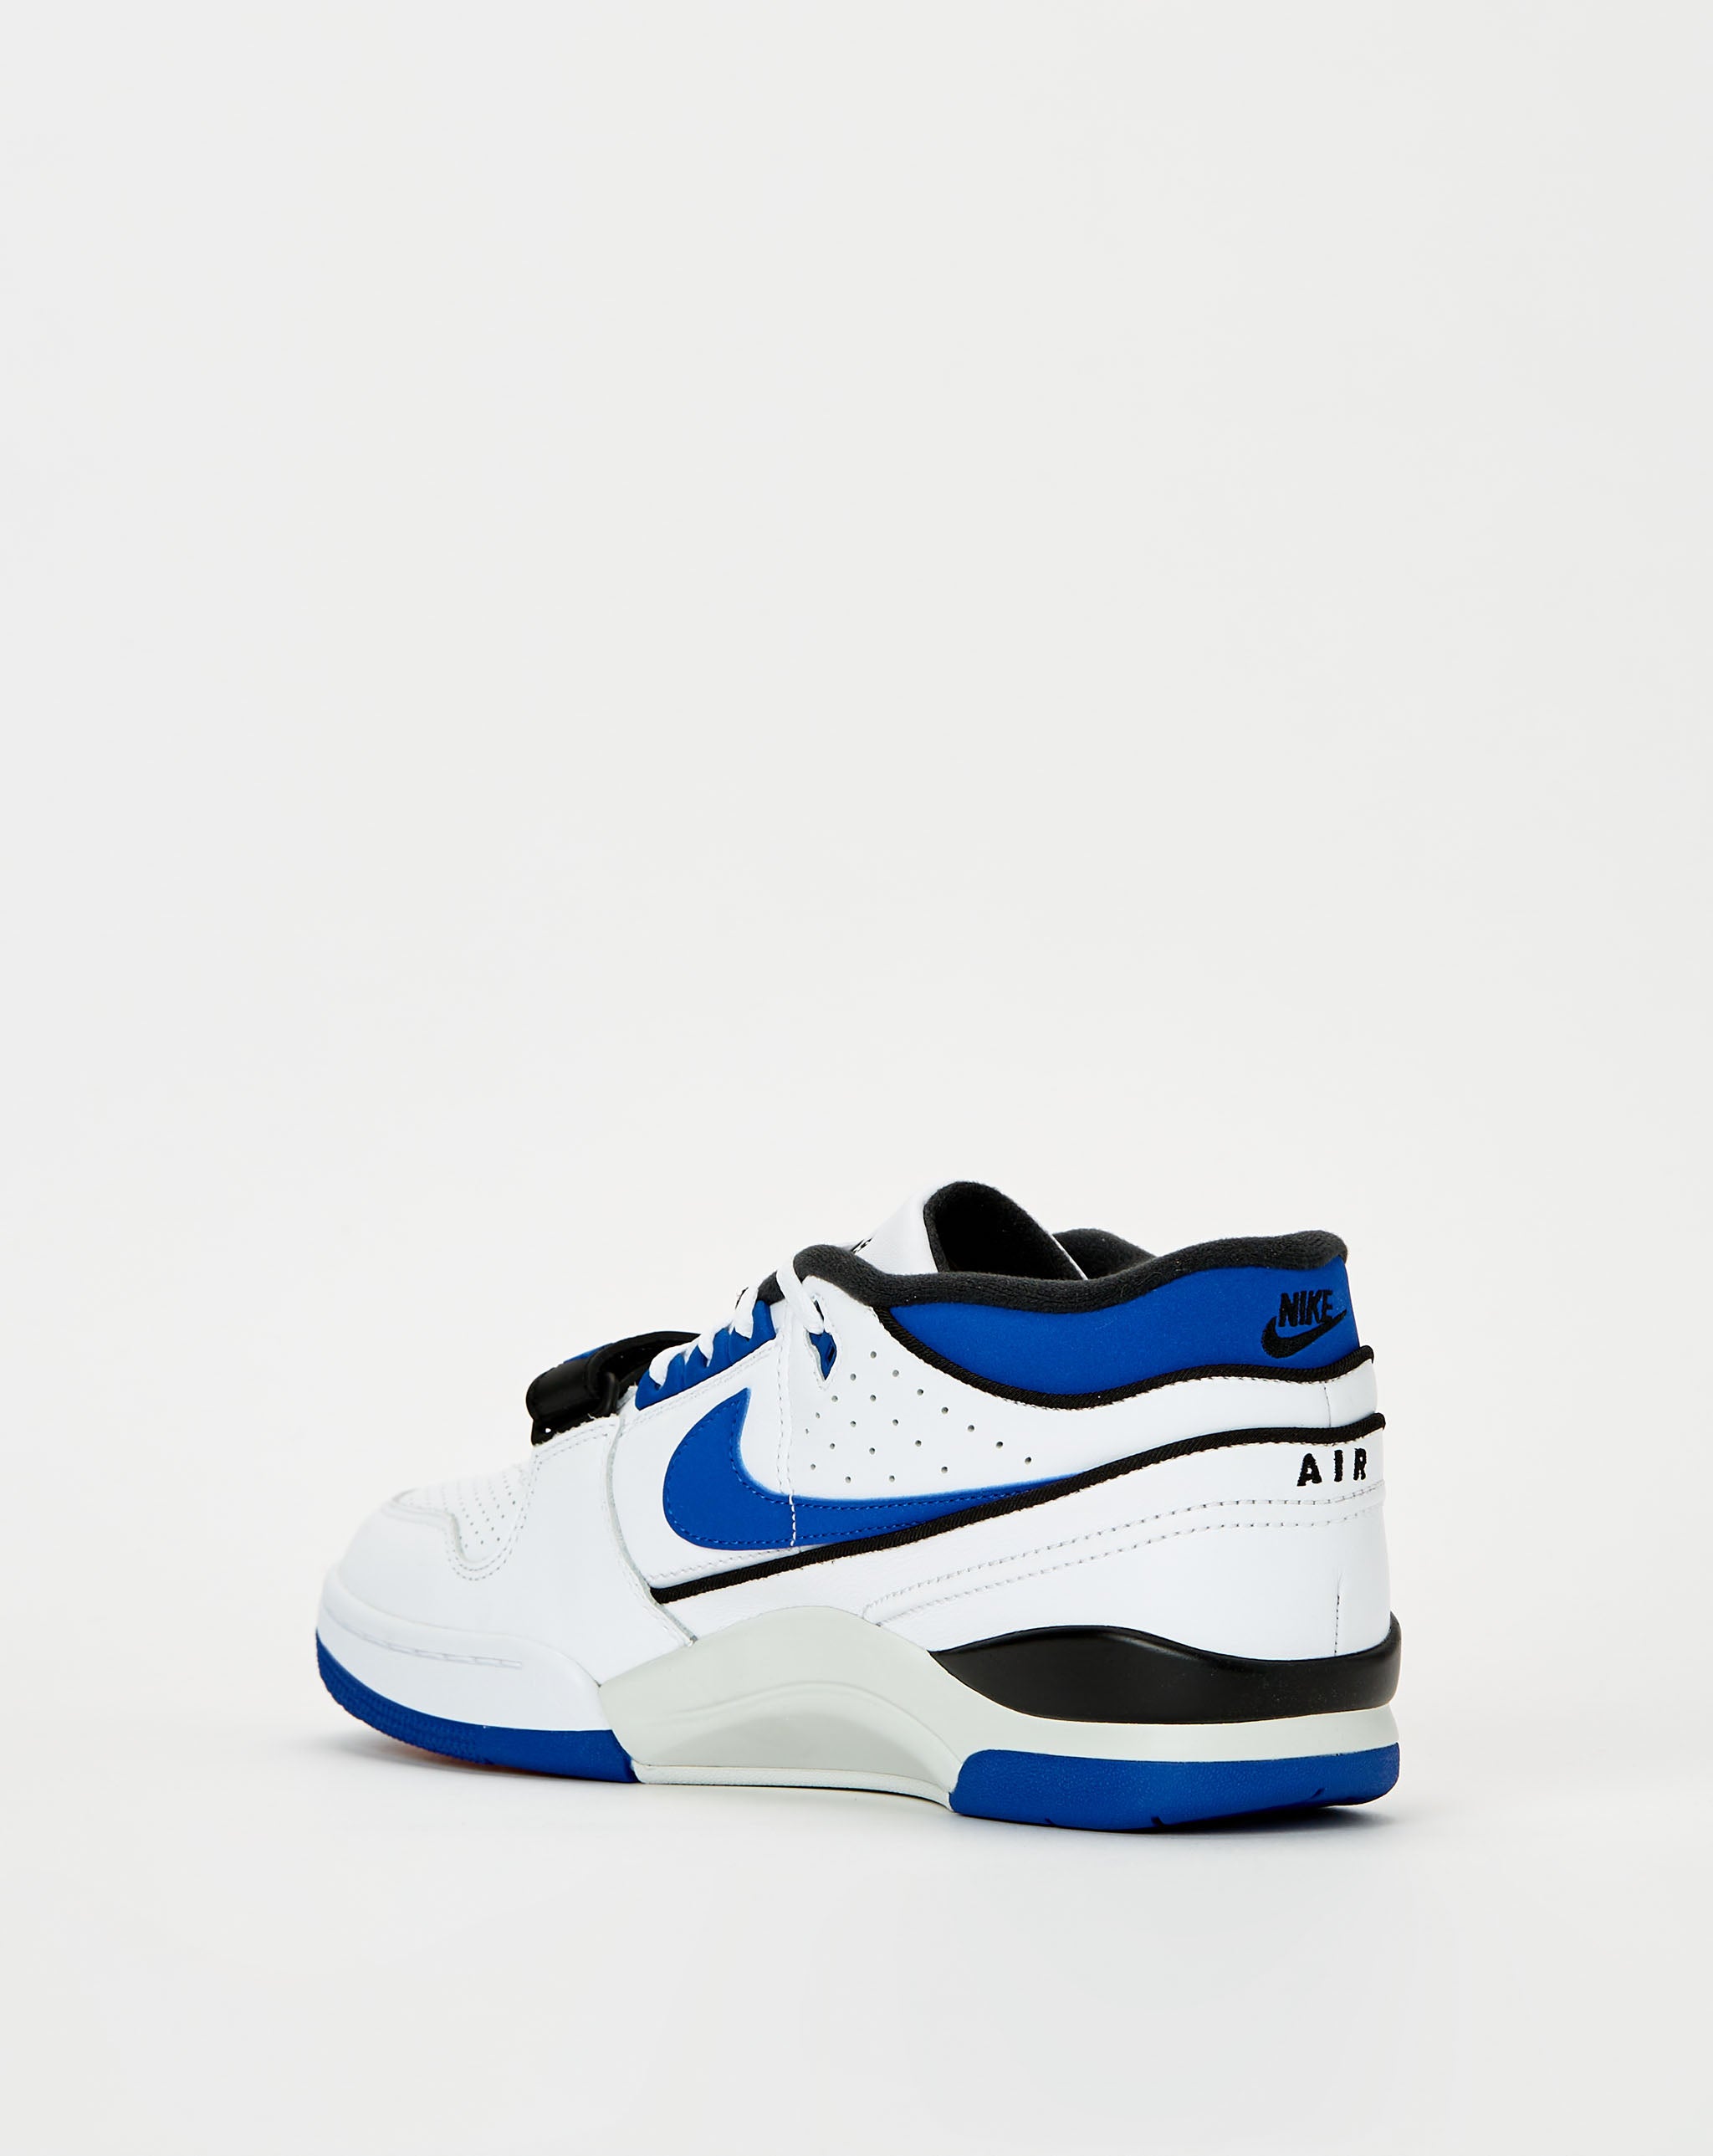 Nike Nike blazer low leather white forest green shoes ci6377-108  - Cheap Erlebniswelt-fliegenfischen Jordan outlet